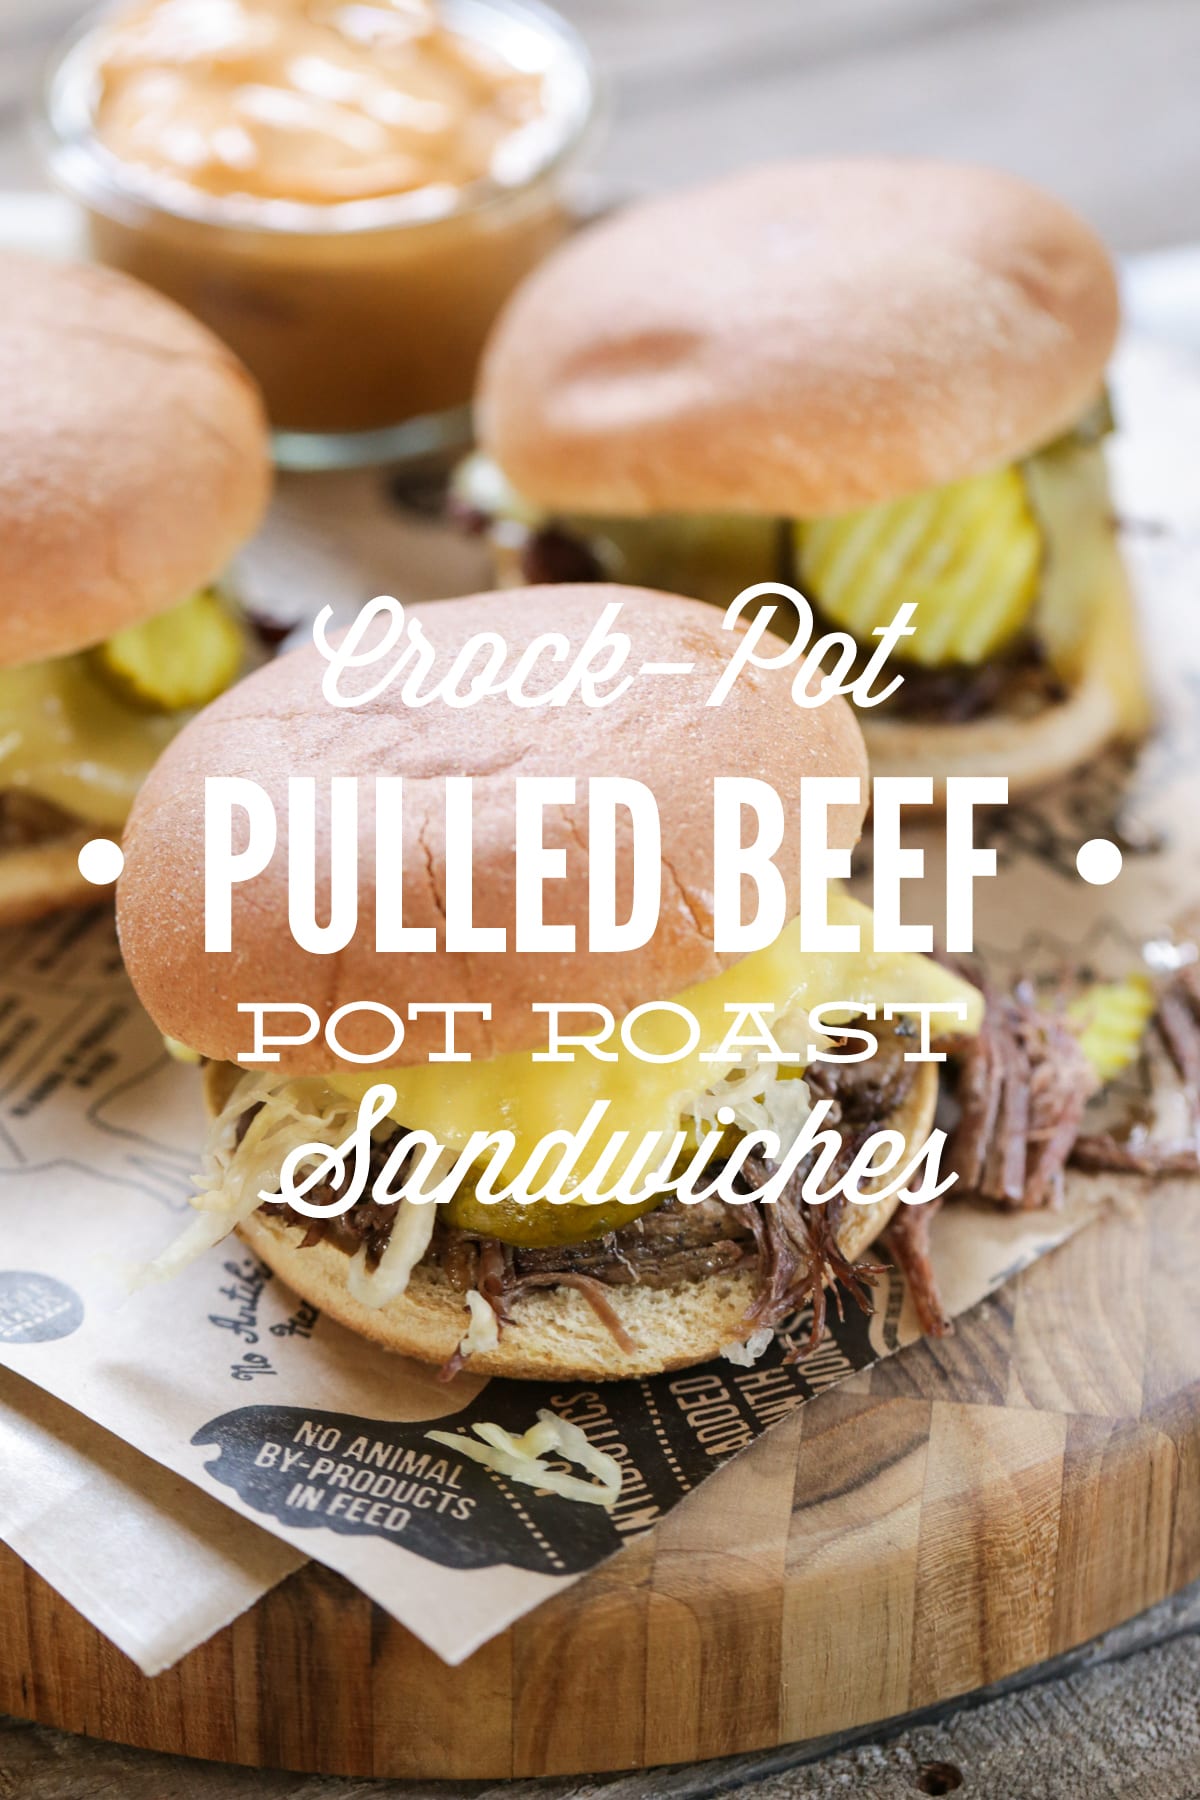 Crock-Pot Pulled Beef Pot Roast Sandwiches